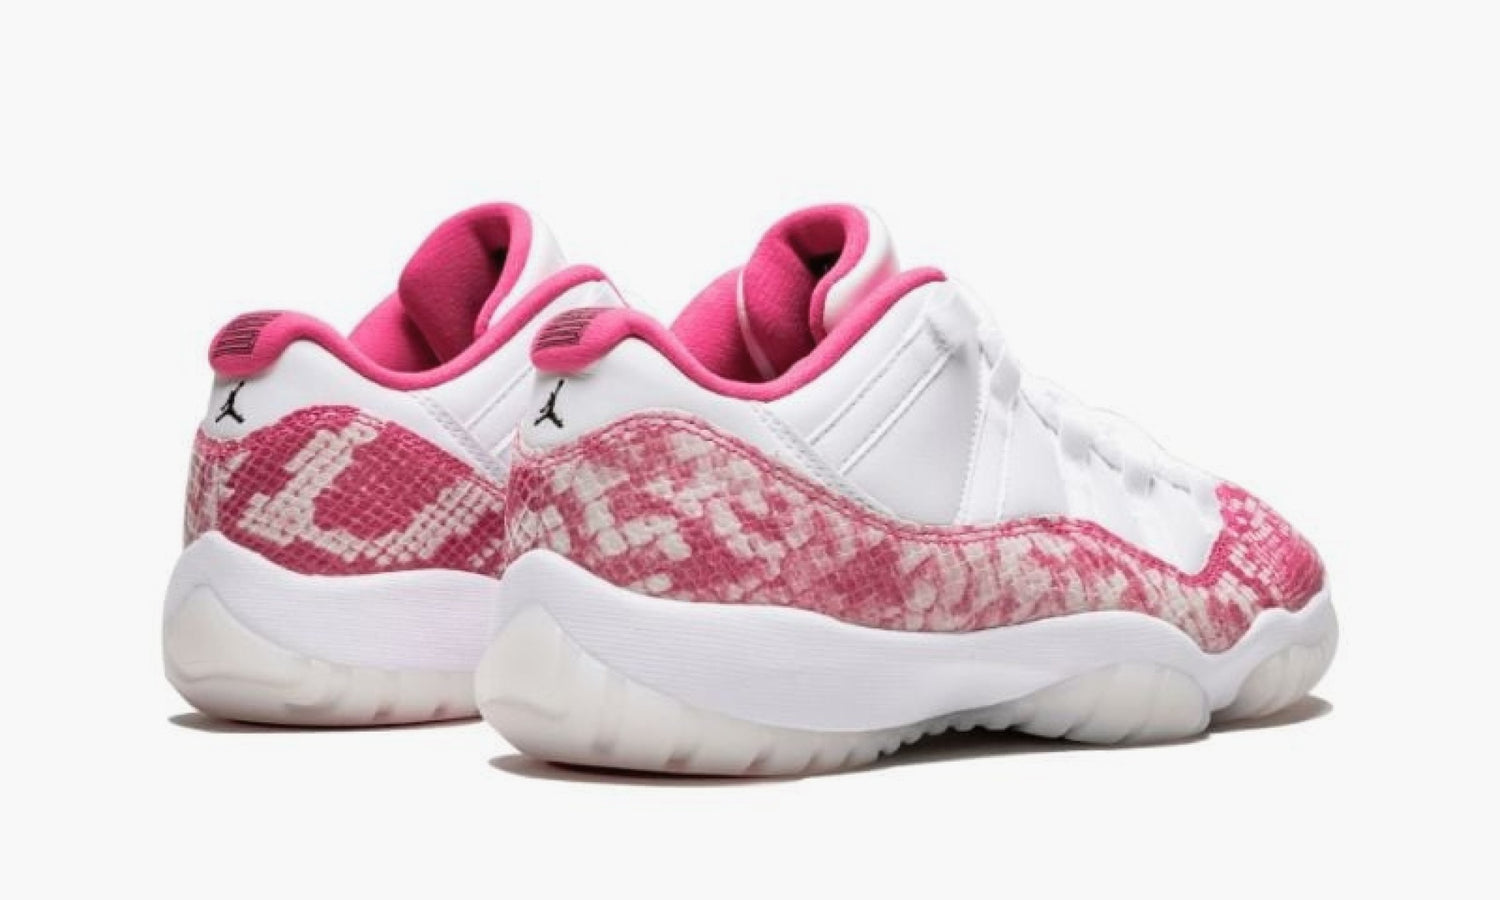 Nike Air Jordan 11 Retro WMNS “Pink Snakeskin” - AH7860 106 | Grailshop